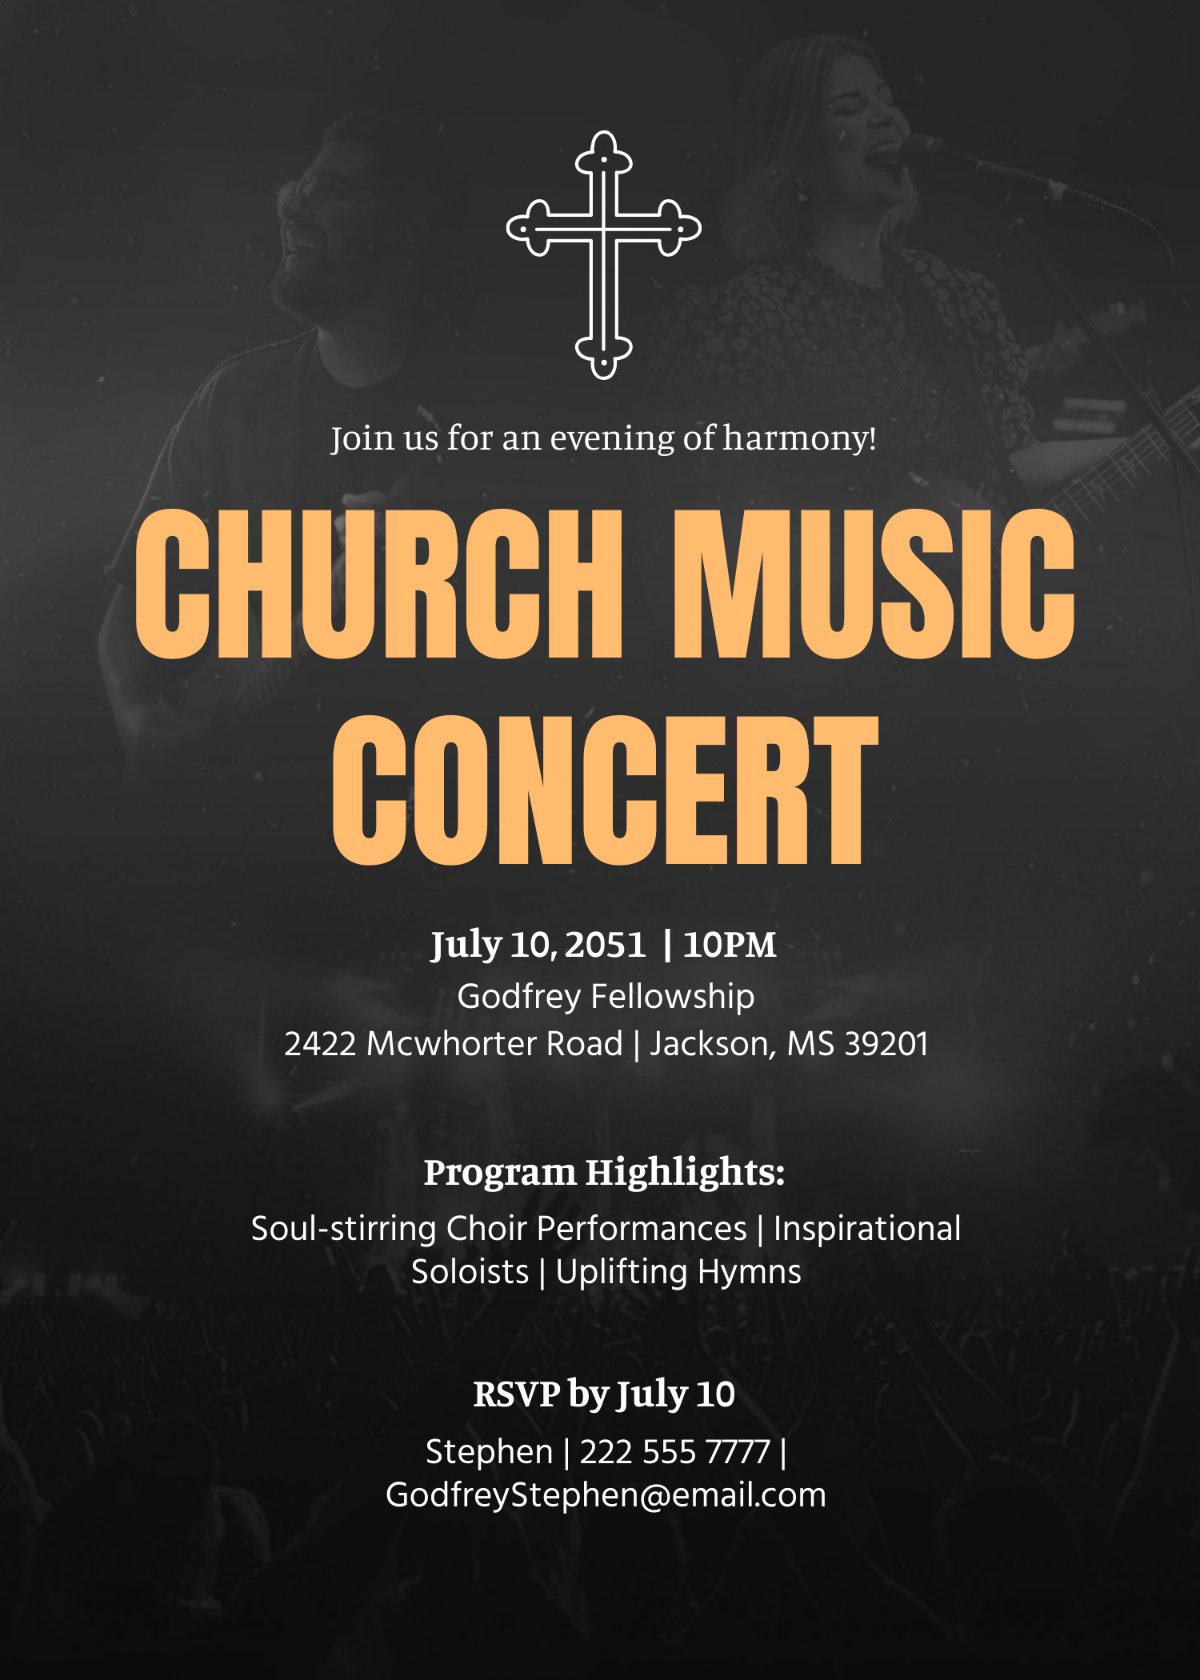 Church Music Concert Invitation